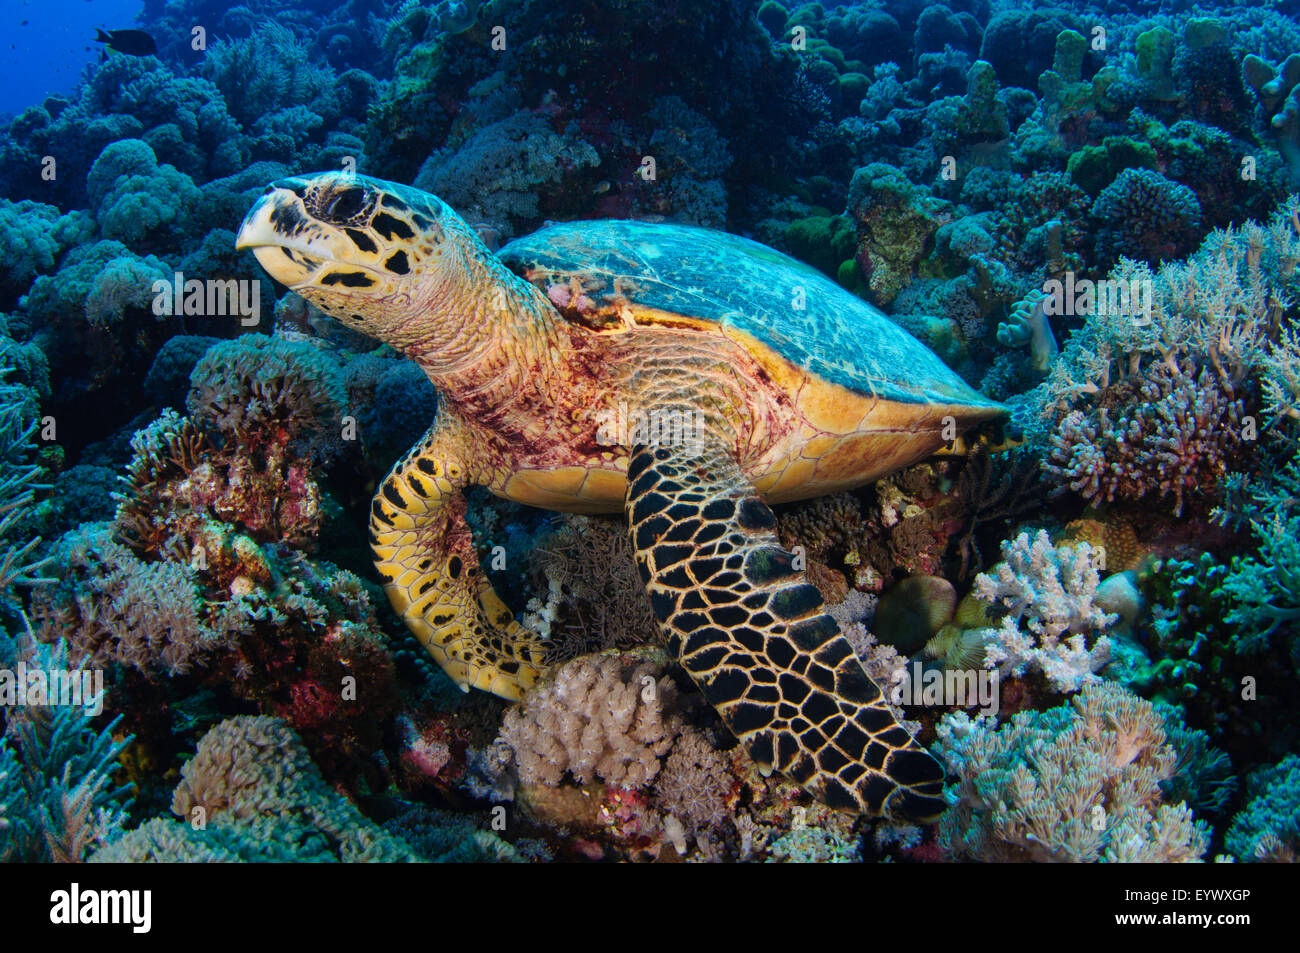 La tortuga carey, Eretmochelys imbricata, sentado en el arrecife, Layang Layang, provincia de Sabah, Borneo, el Mar del Sur de China, Malasia, Foto de stock